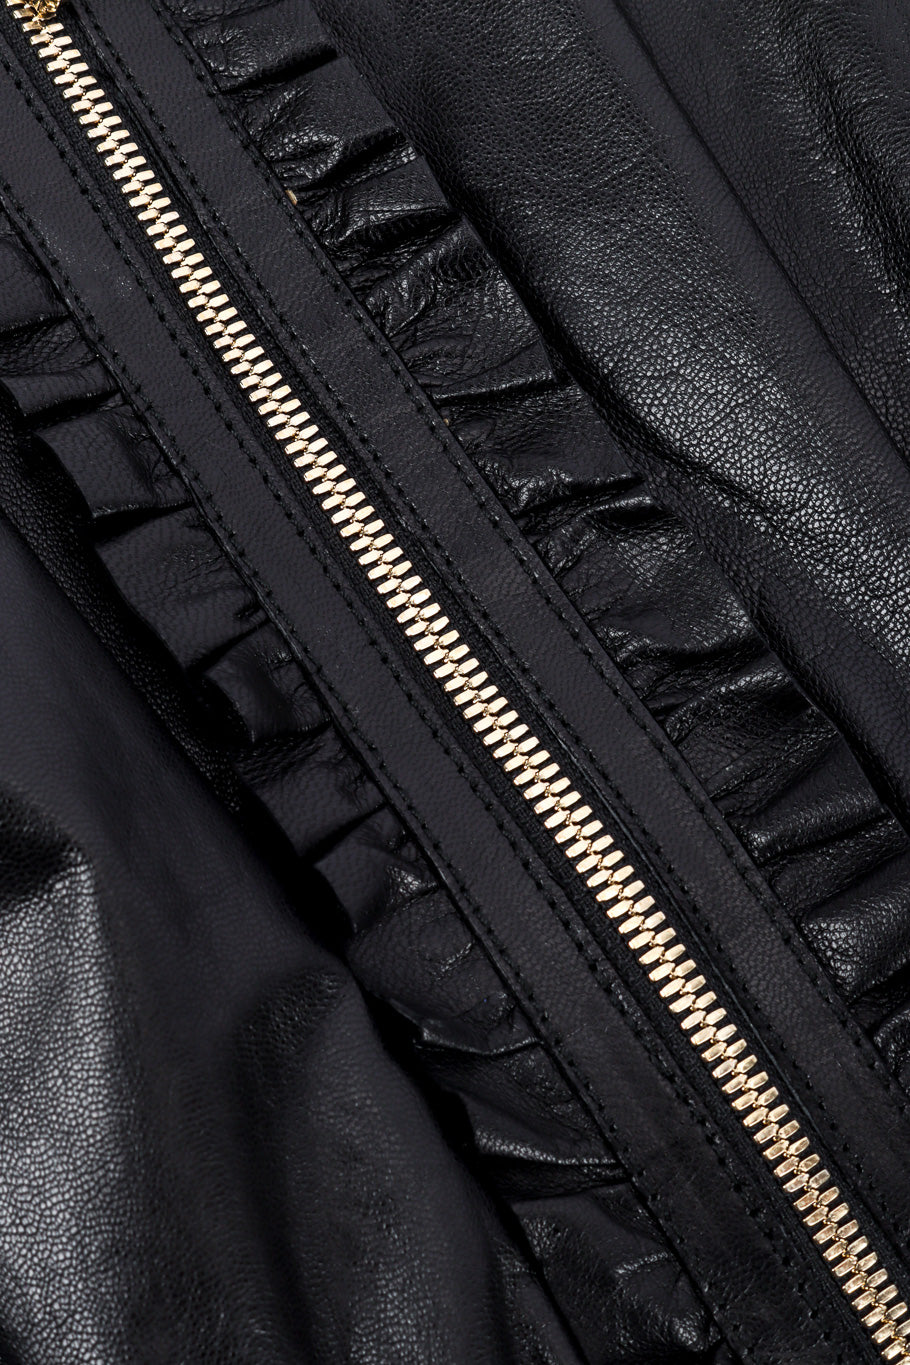 Gucci Leather Ruffle Top front zip and ruffle closeup @Recessla